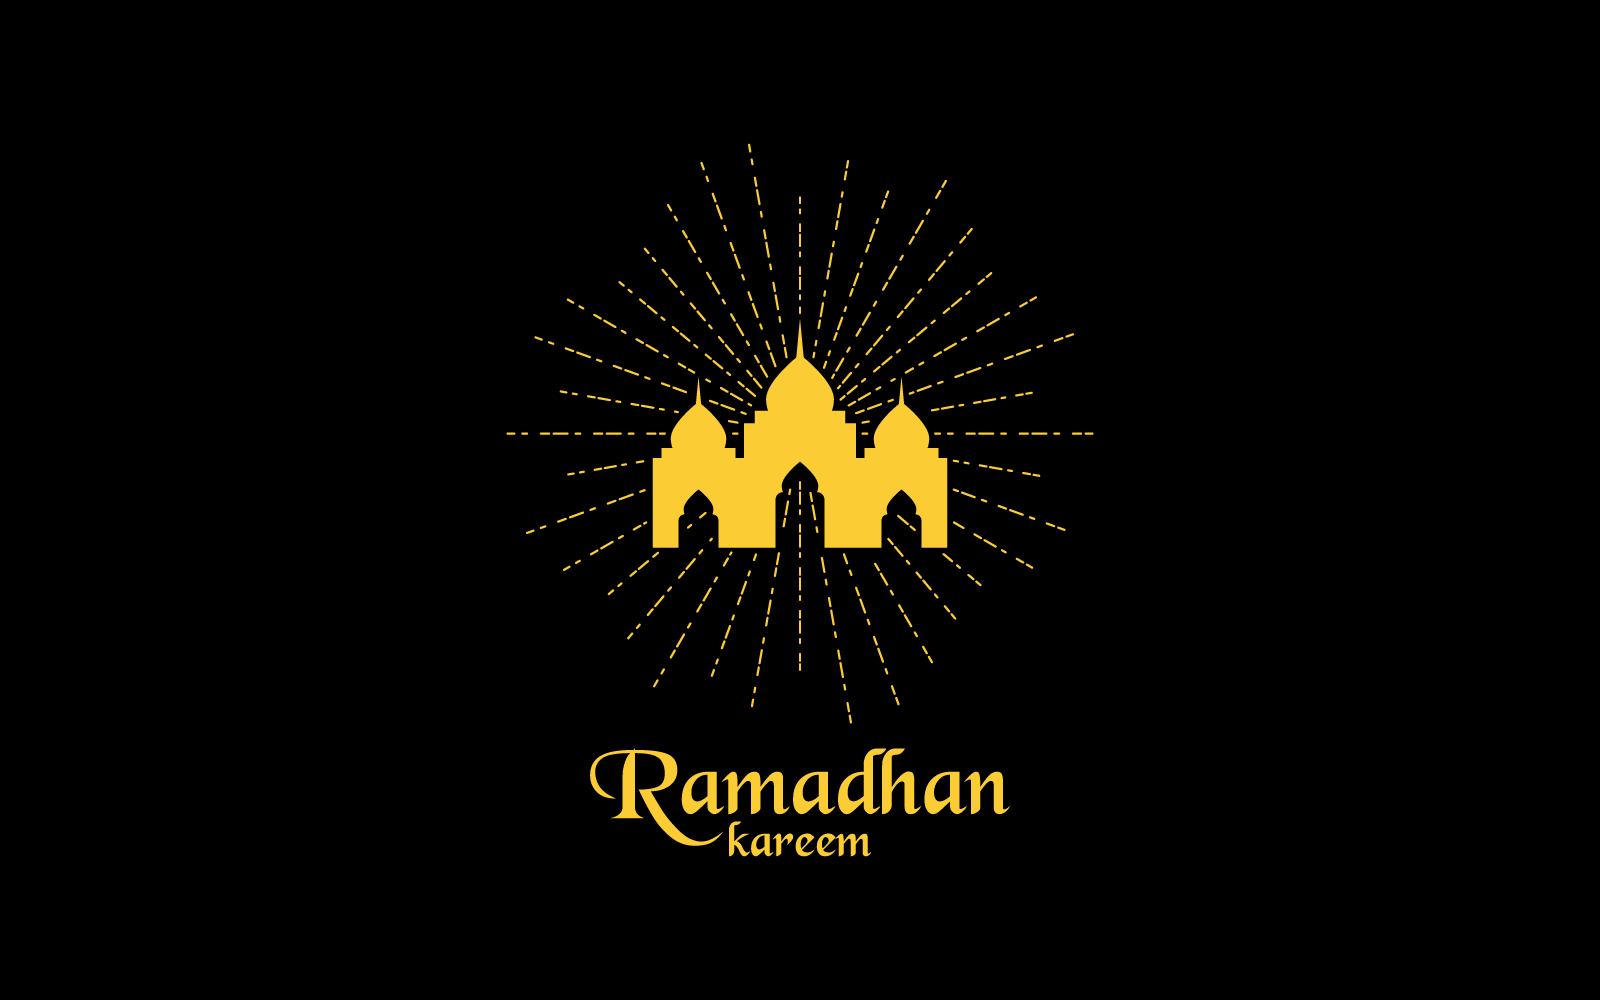 Islamic, Mosque,ramadhan kareem logo illustration template